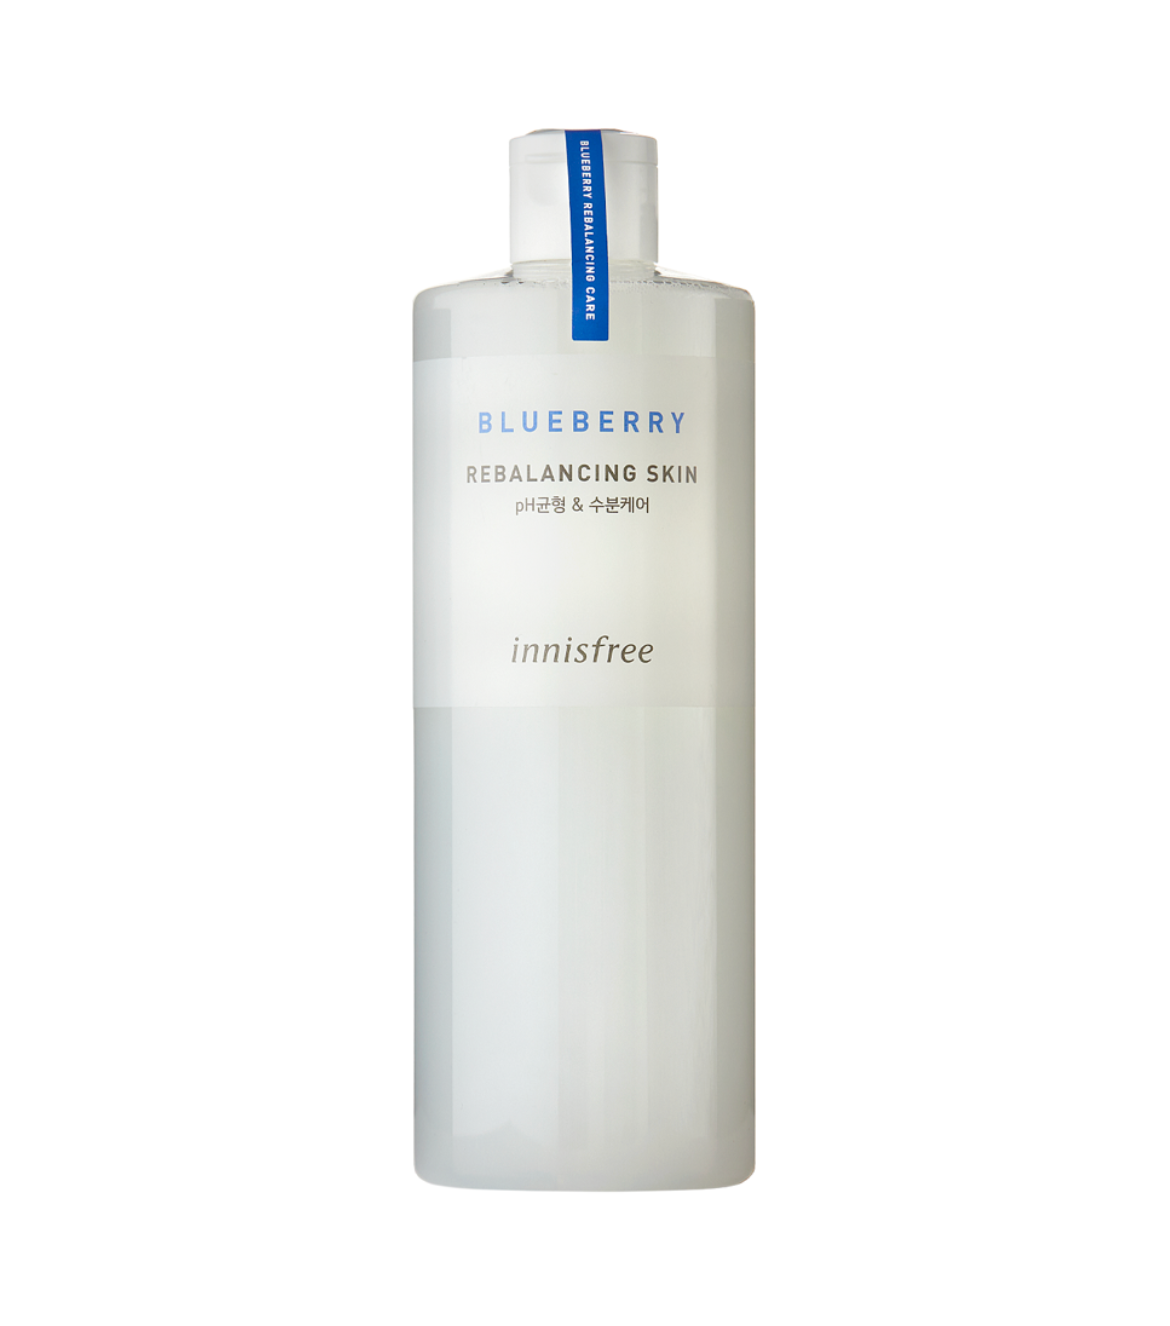 Innisfree - Blueberry Rebalancing Skin - 500ml